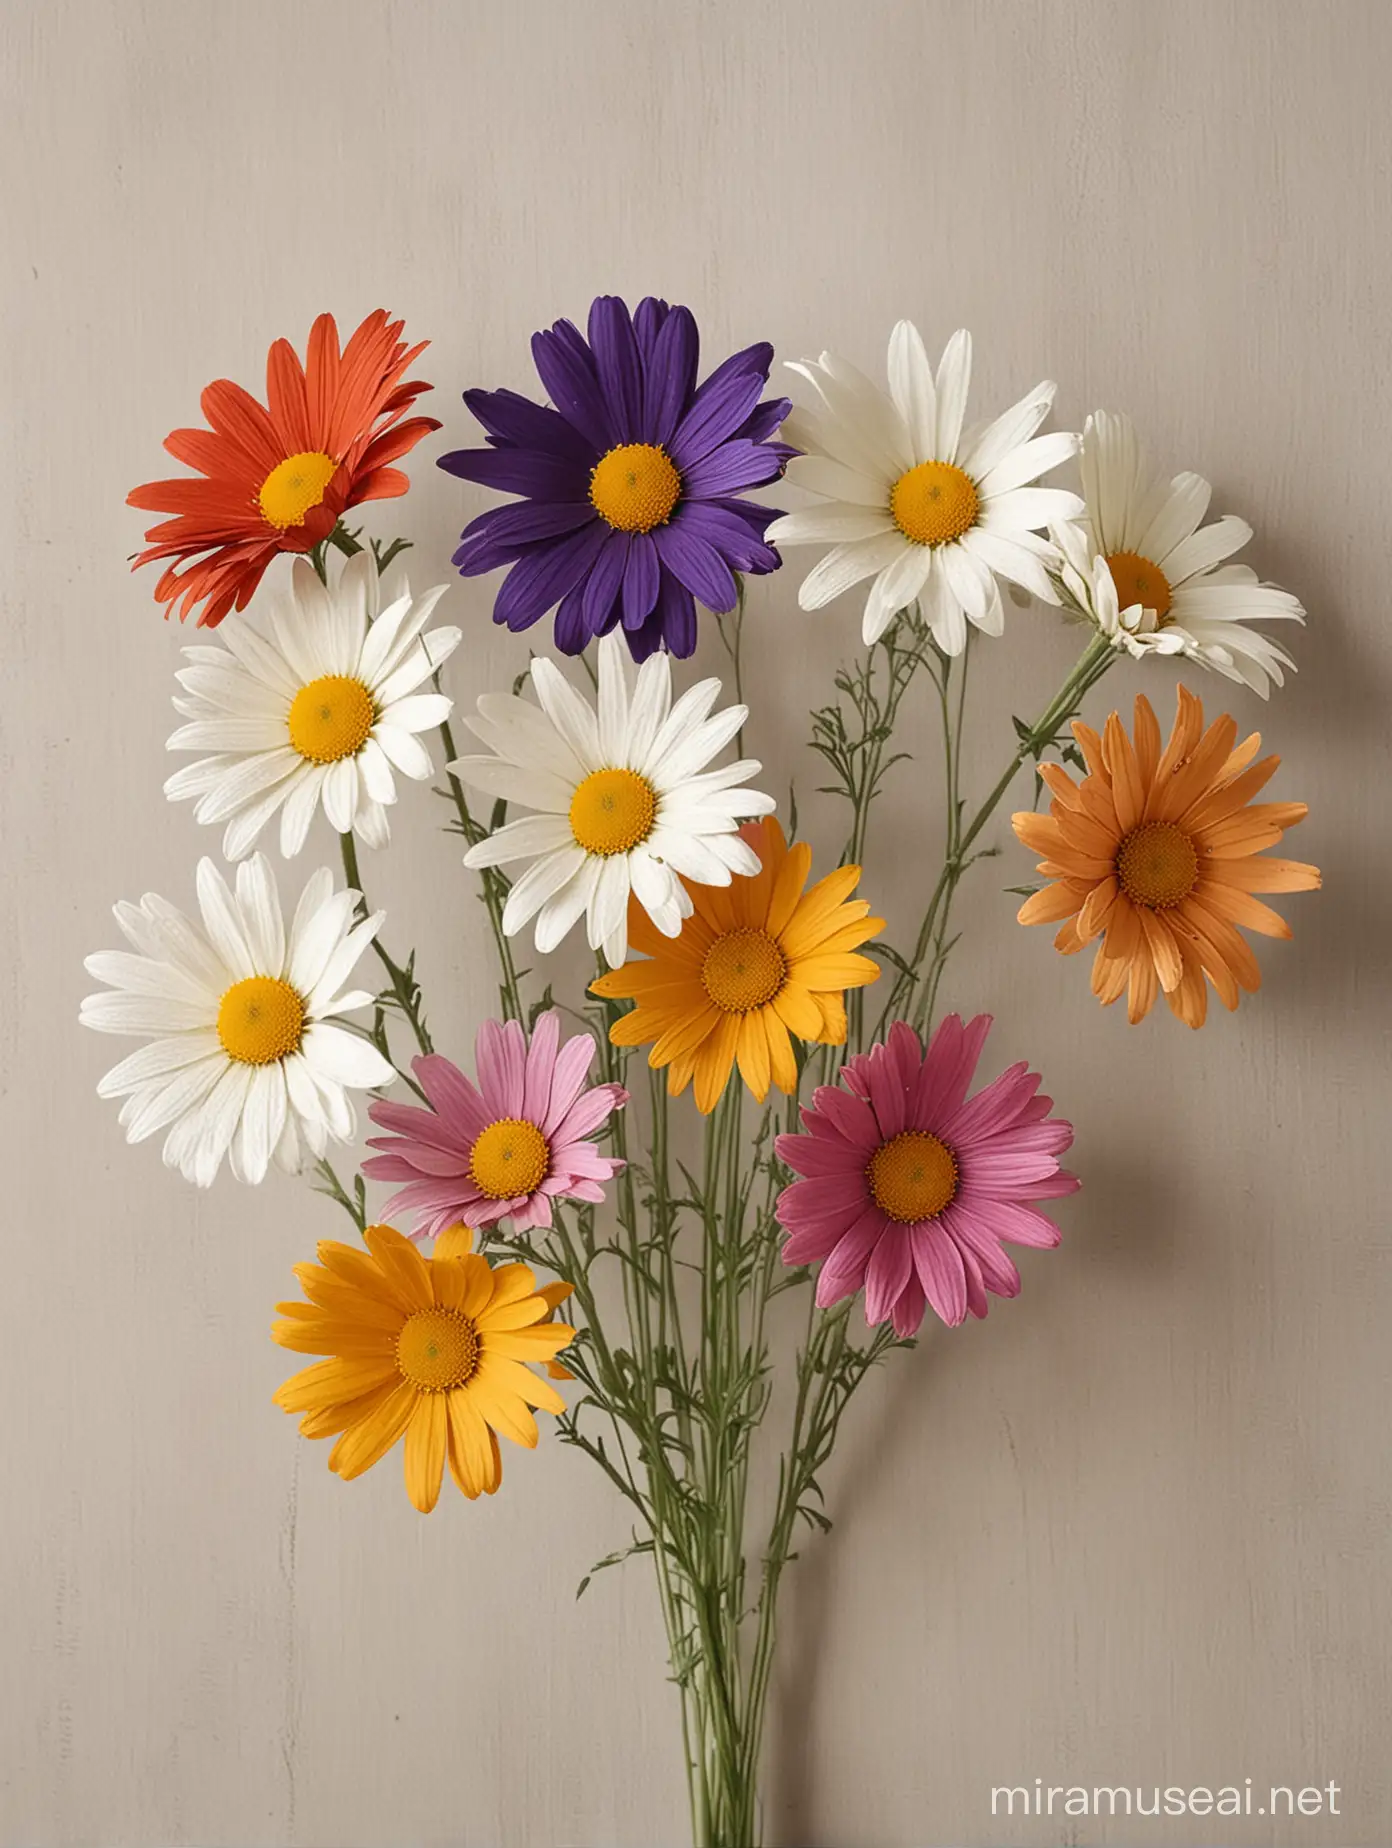 Vibrant Daisy Wildflower Botanical in Stylish Decorative Setting